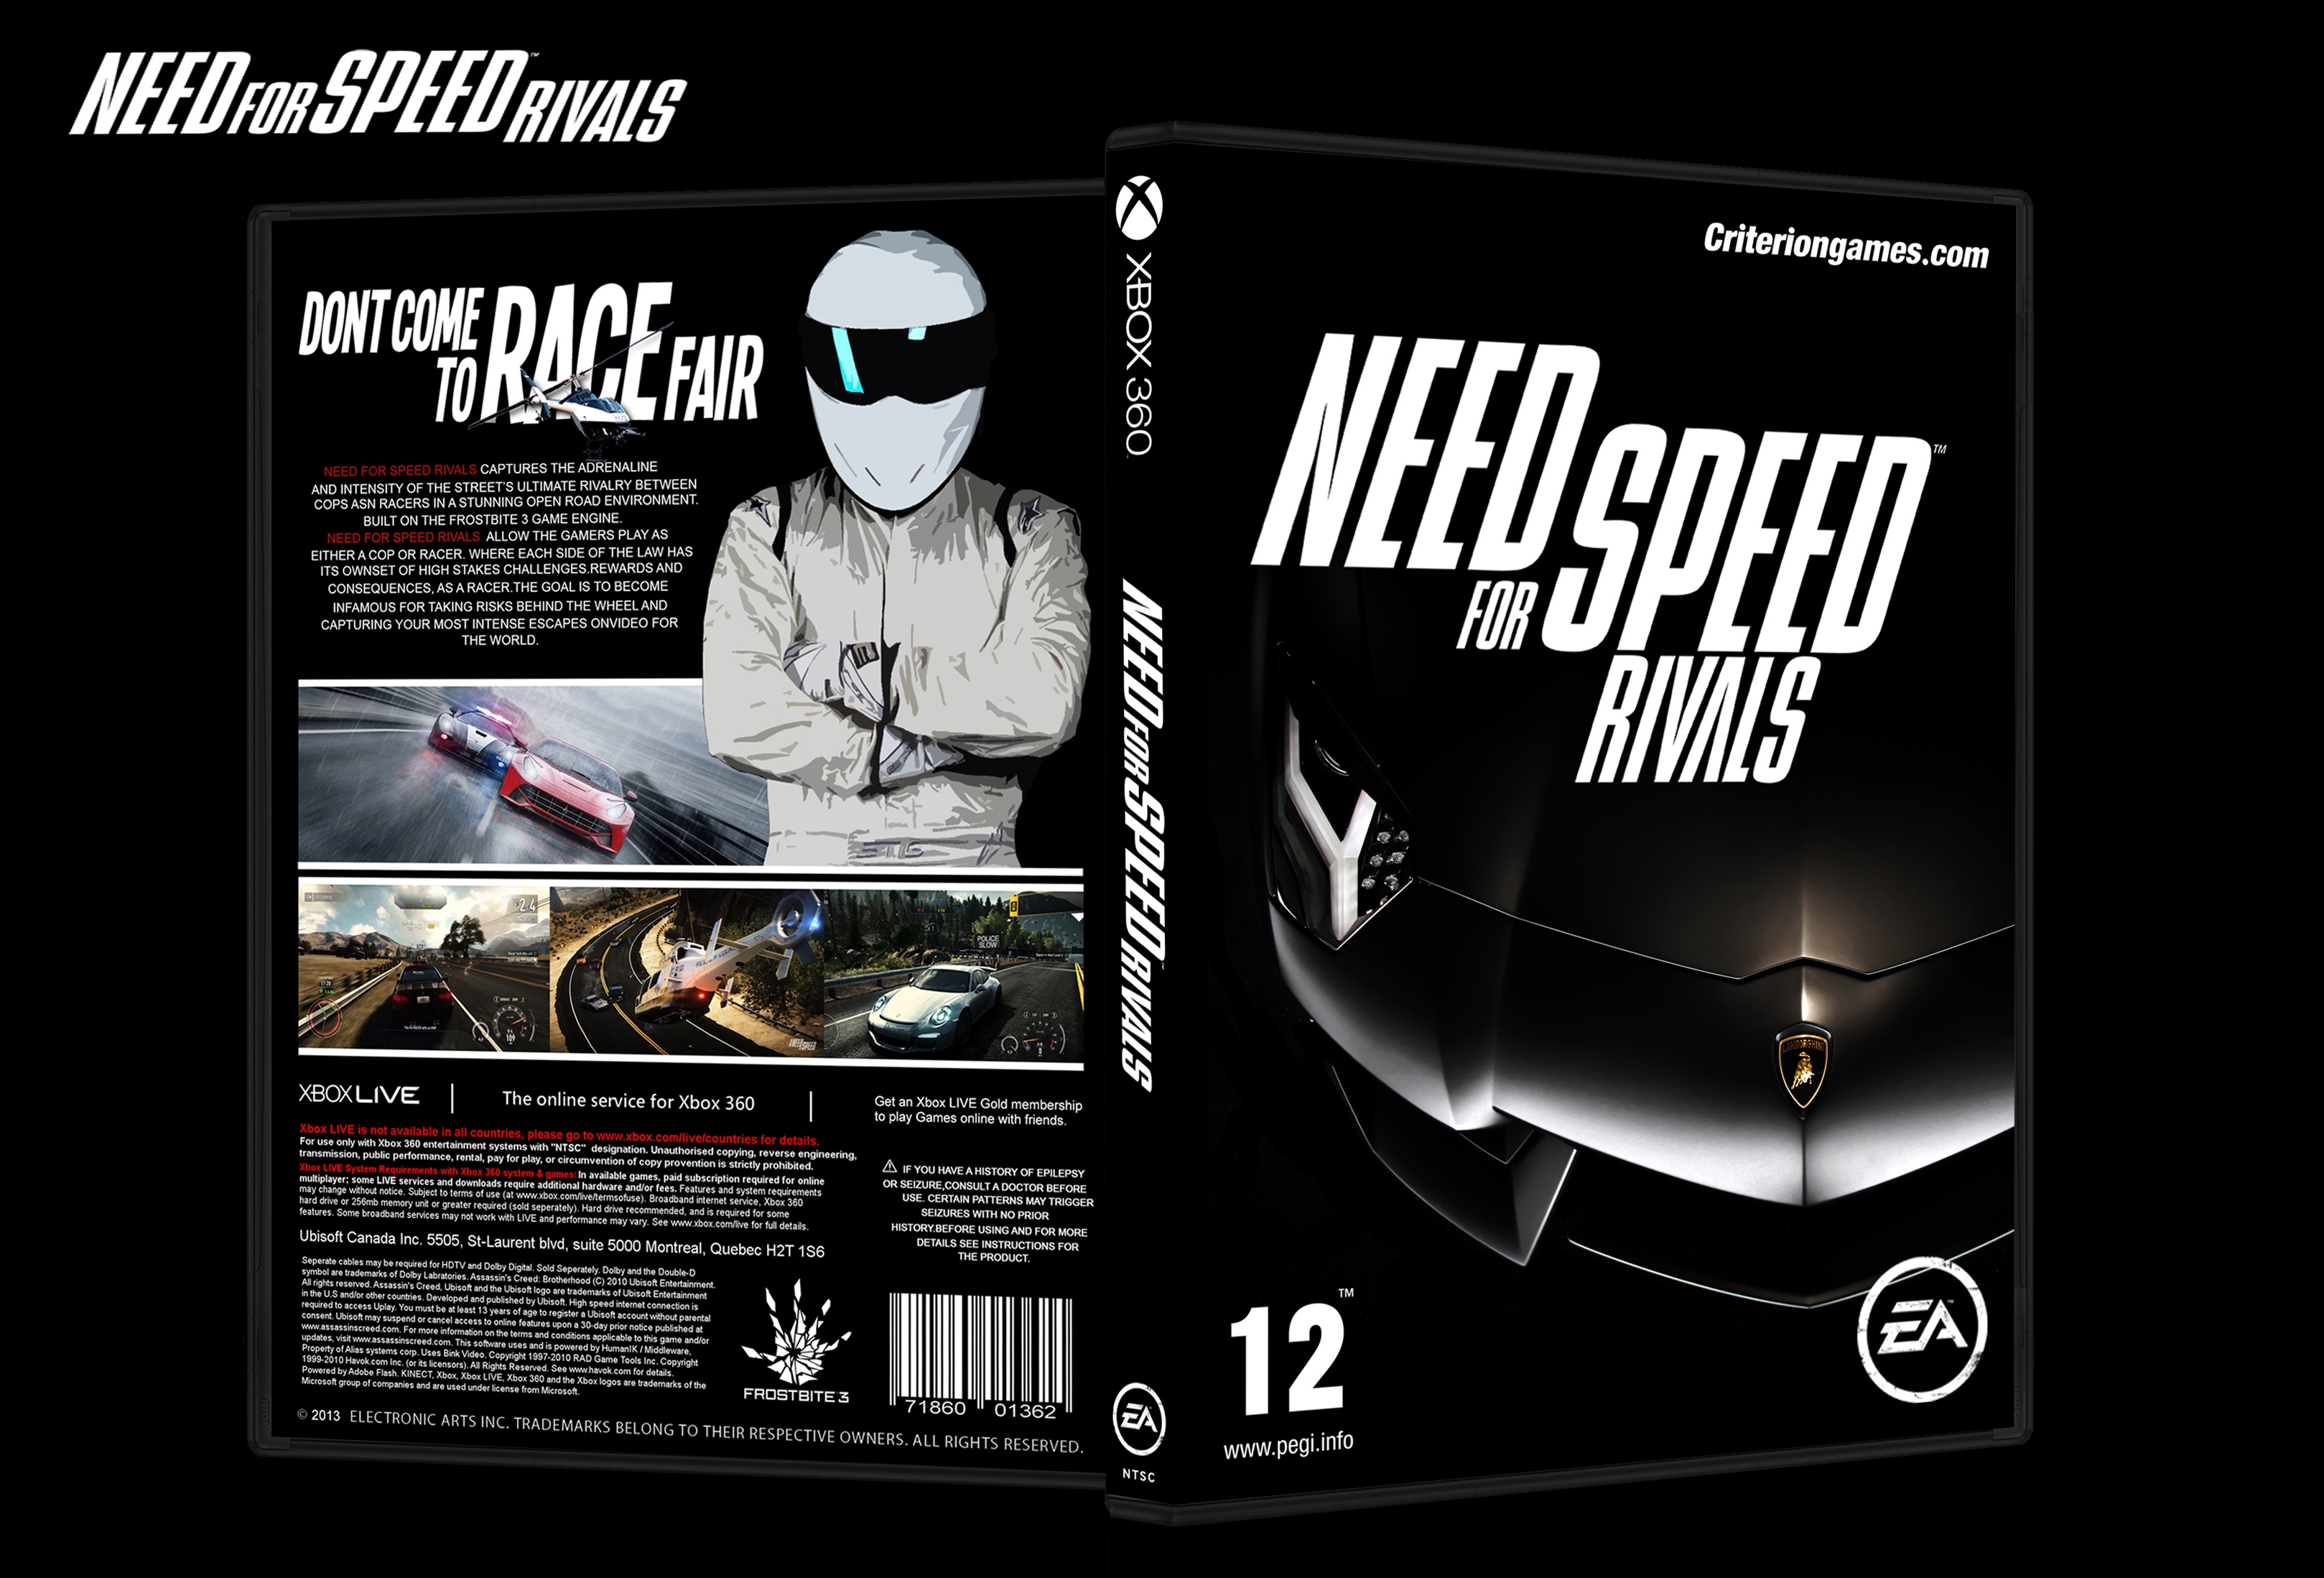 Need For Speed Rivals Game Xbox 360 Licença Digital Original - ADRIANAGAMES